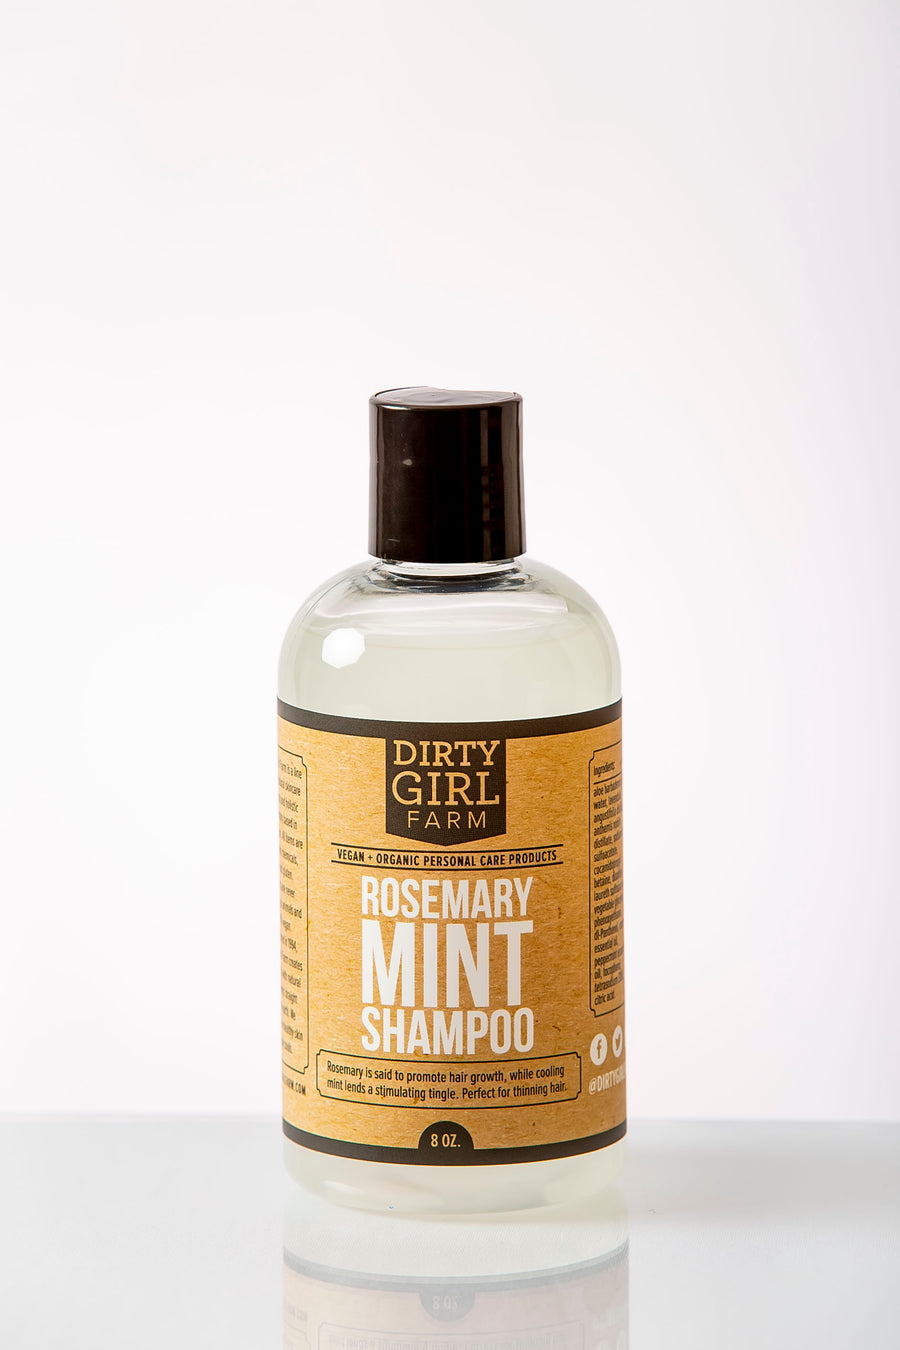 Dirty Girl Farm Rosemary Mint Shampoo